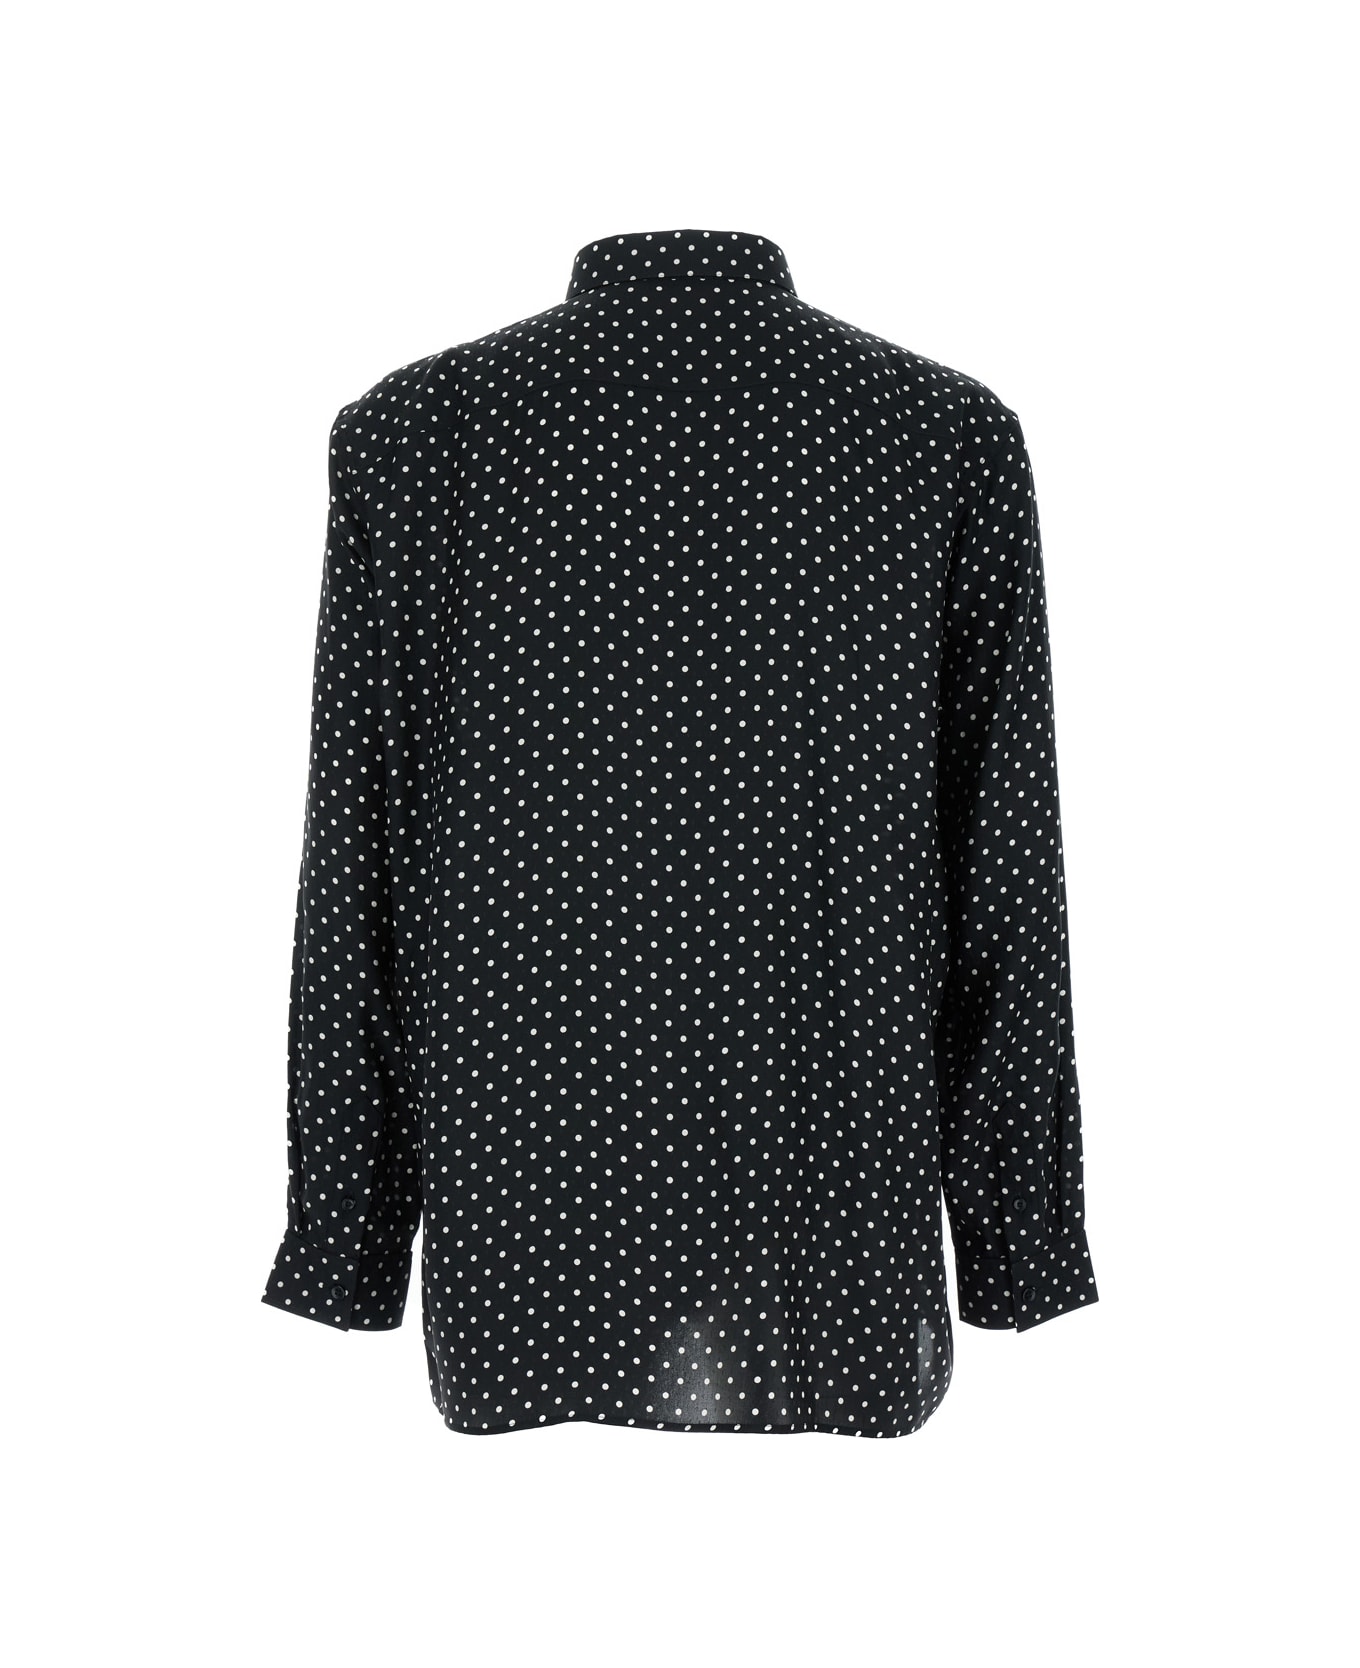 Saint Laurent Black All-over Polka Dot Pattern Shirt In Silk Man - Noir/craie